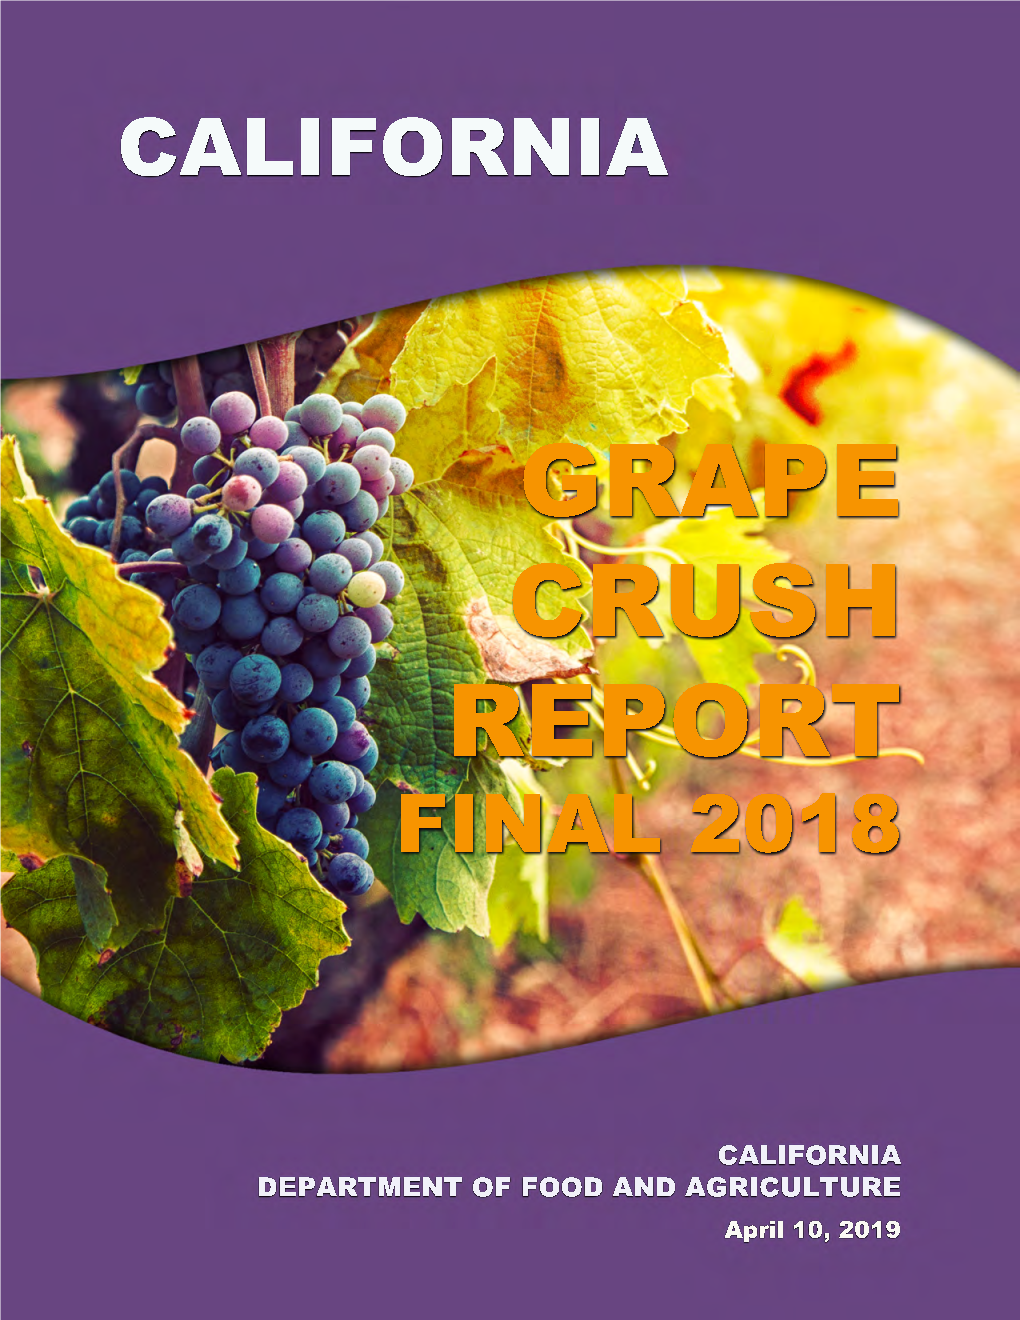 2018 Final Grape Crush Report